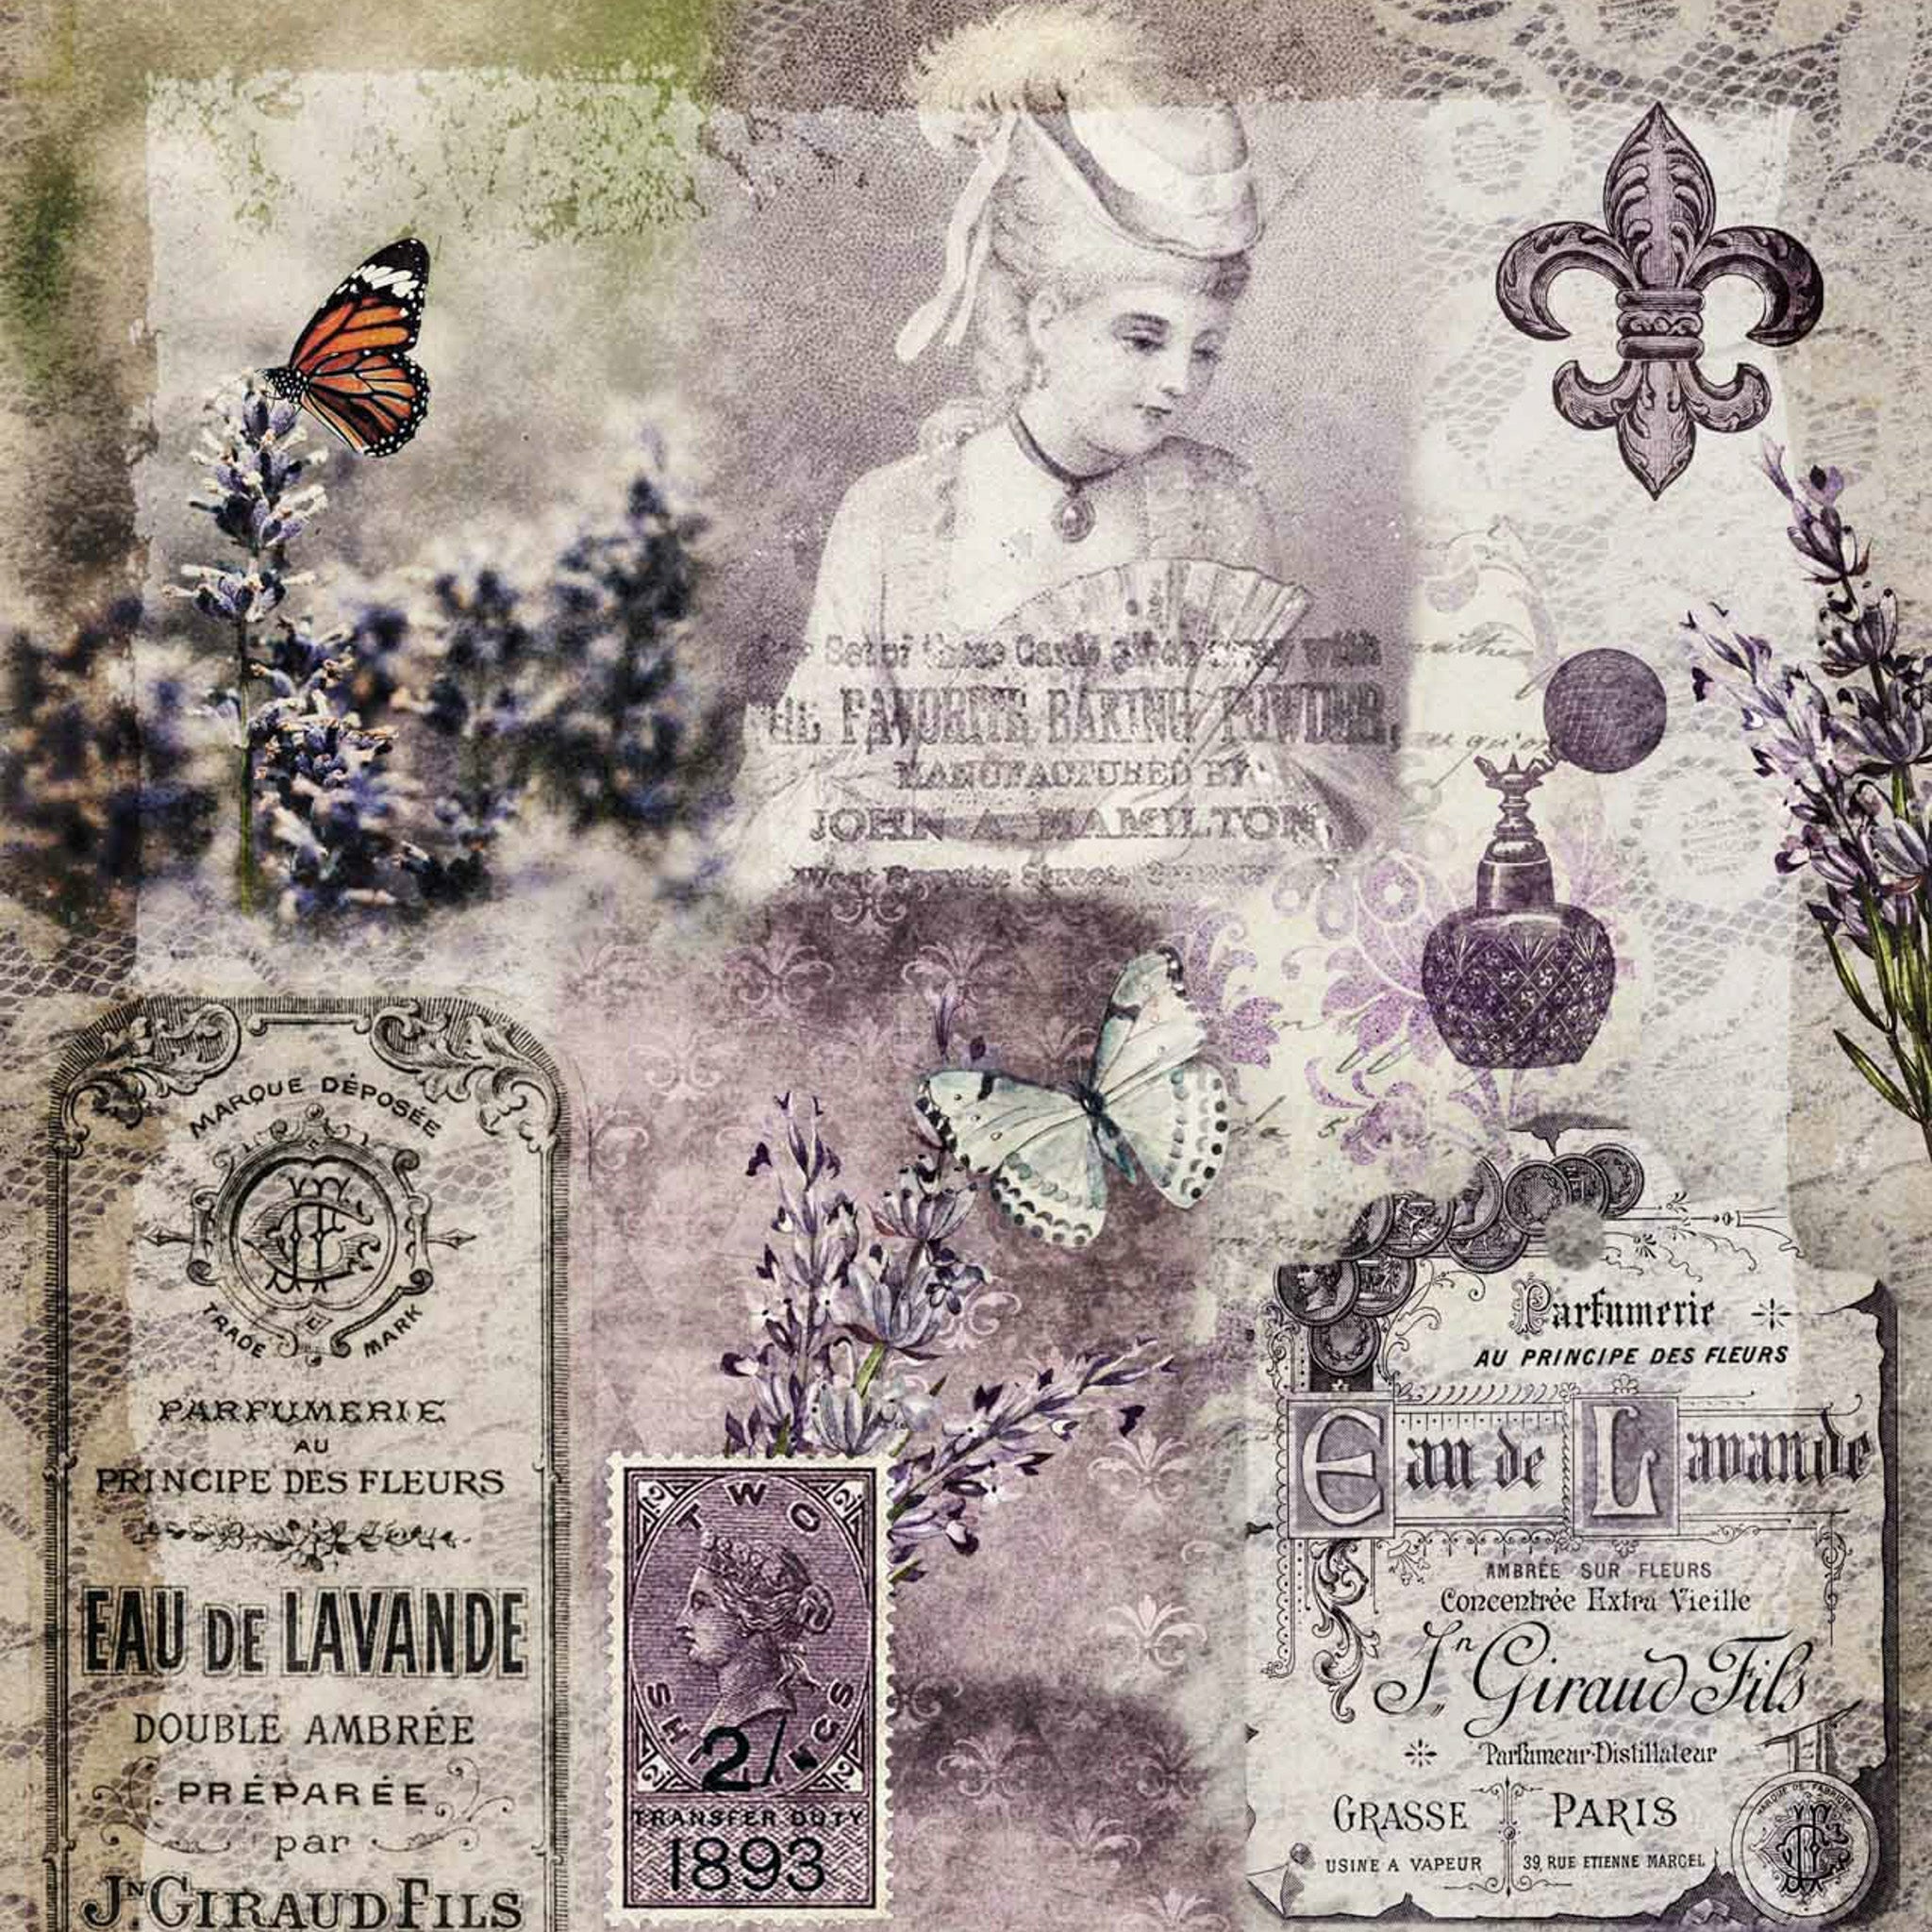 A2 rice paper design that features a collage of vintage lavender perfume labels and plants, fleur de lis, vintage stamps, and butterflies.